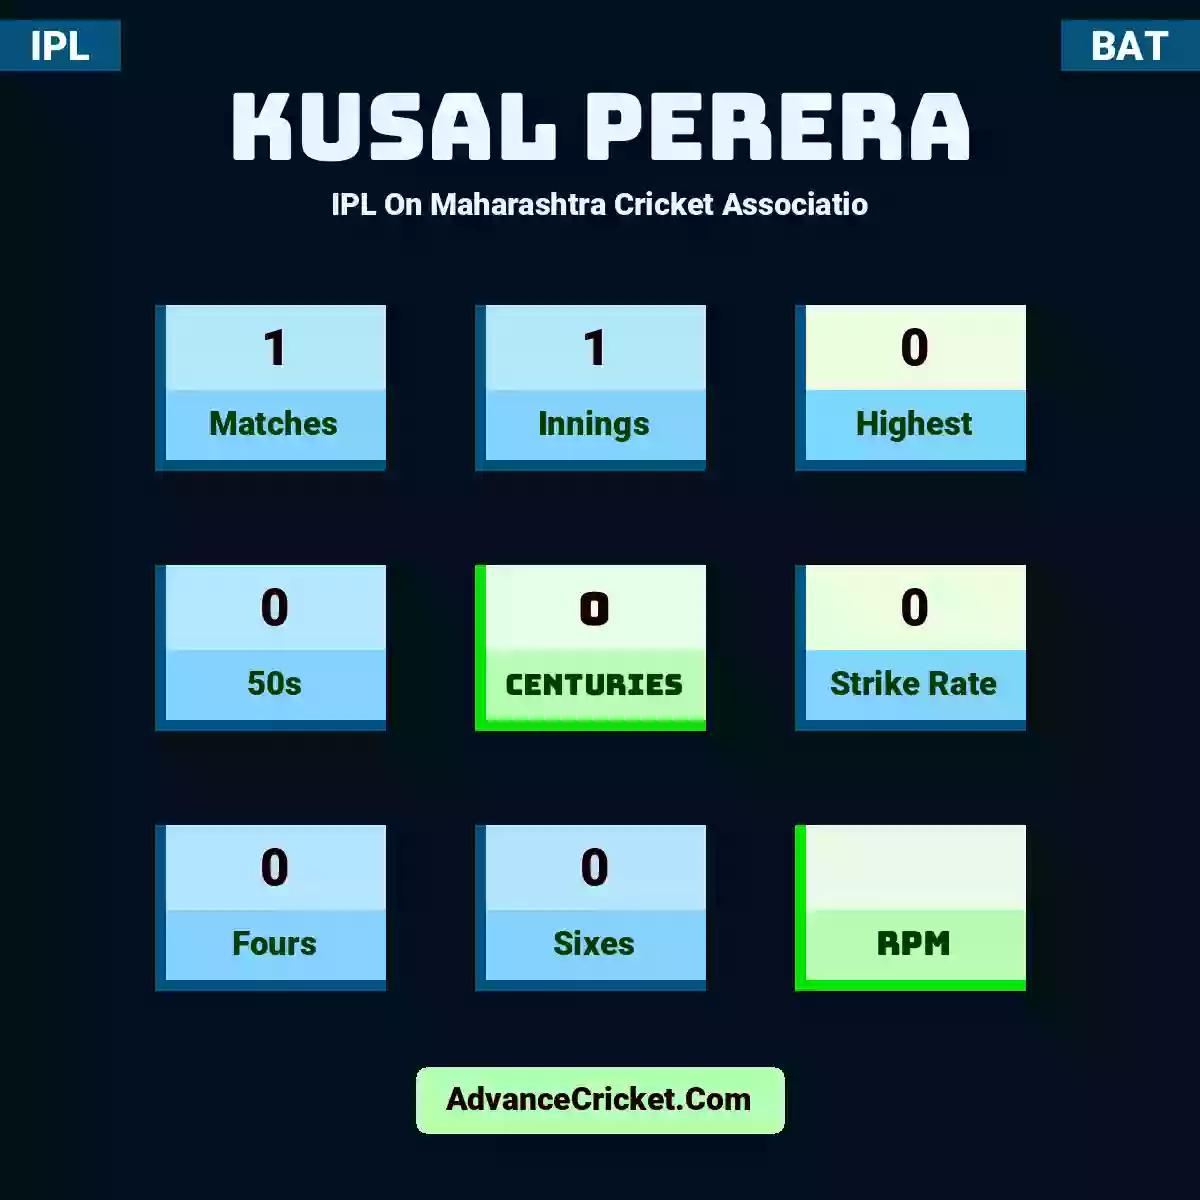 Kusal Perera IPL  On Maharashtra Cricket Associatio, Kusal Perera played 1 matches, scored 0 runs as highest, 0 half-centuries, and 0 centuries, with a strike rate of 0. K.Perera hit 0 fours and 0 sixes.